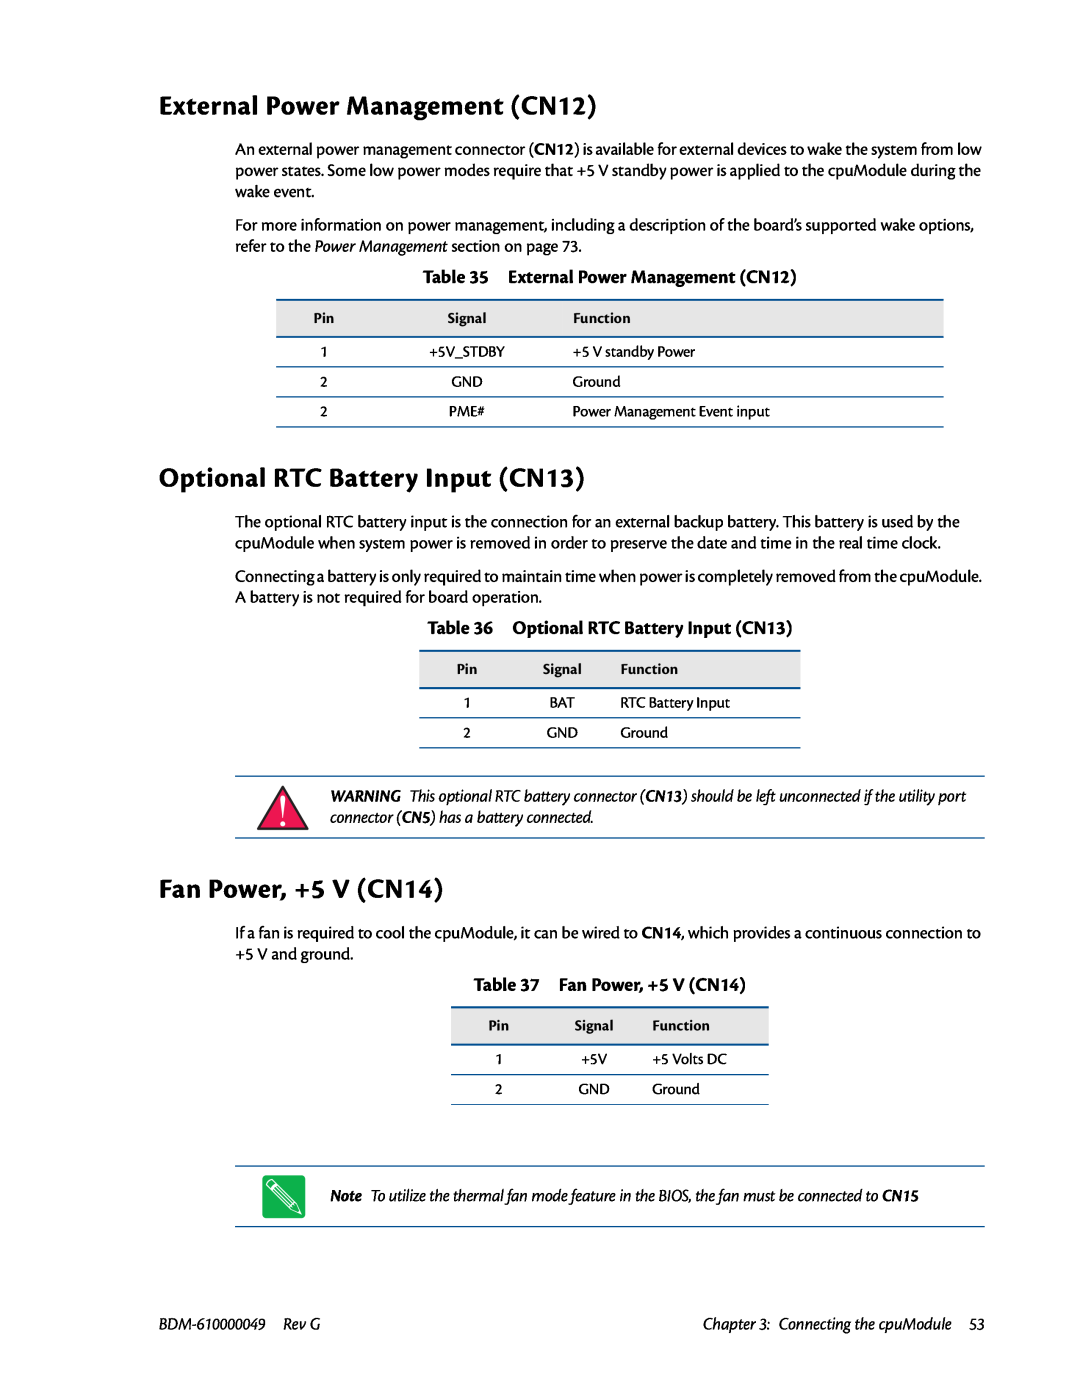 IBM BDM-610000049 user manual External Power Management CN12, Optional RTC Battery Input CN13, Fan Power, +5 V CN14 